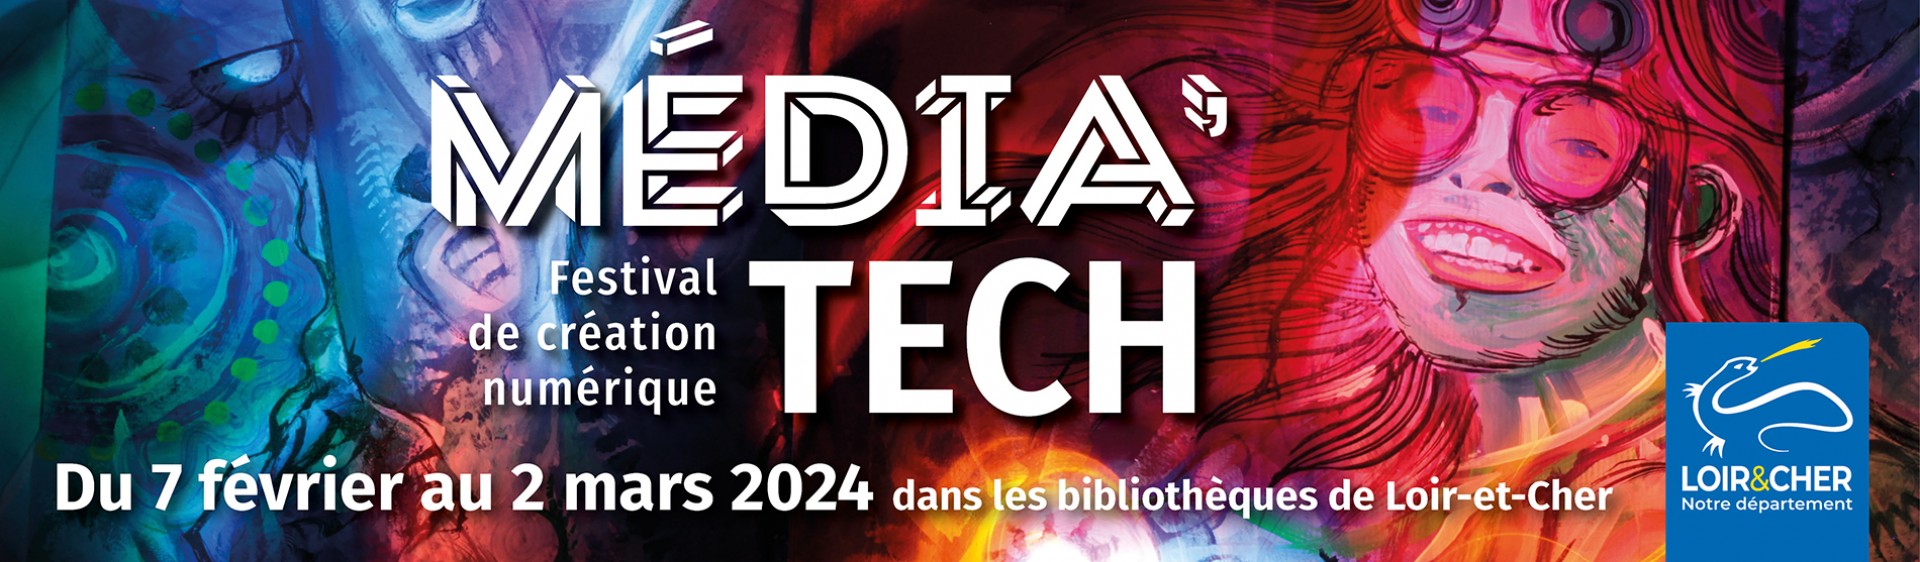 Média'Tech 2024 